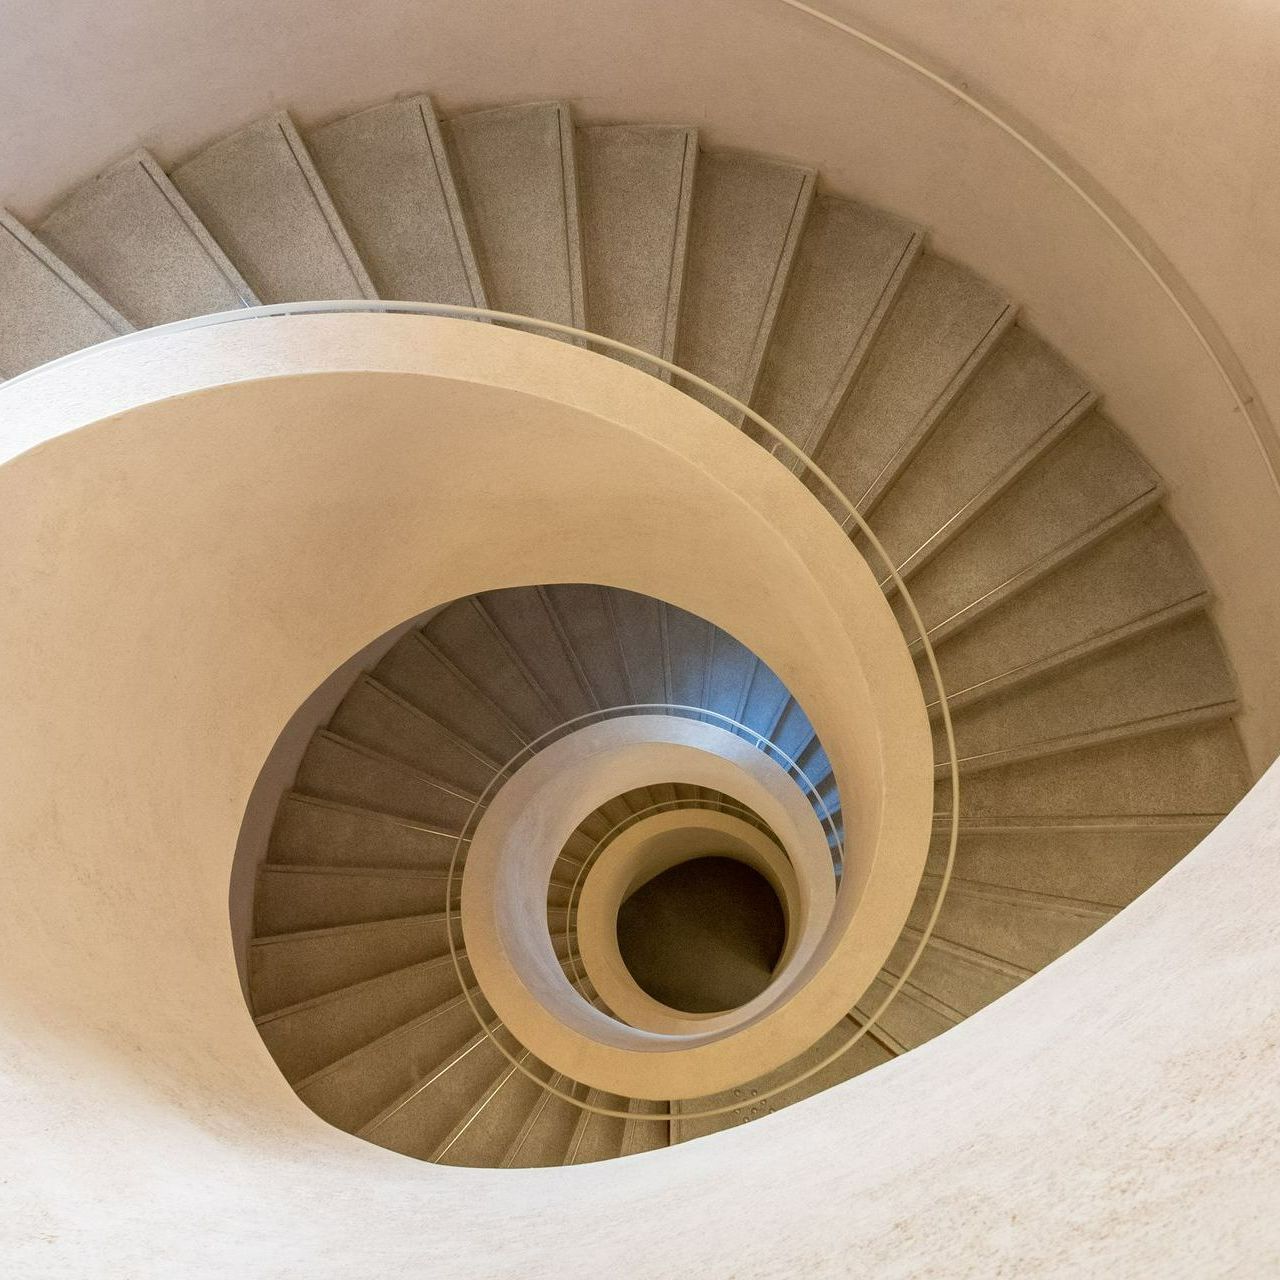 Un escalier en forme de spirale